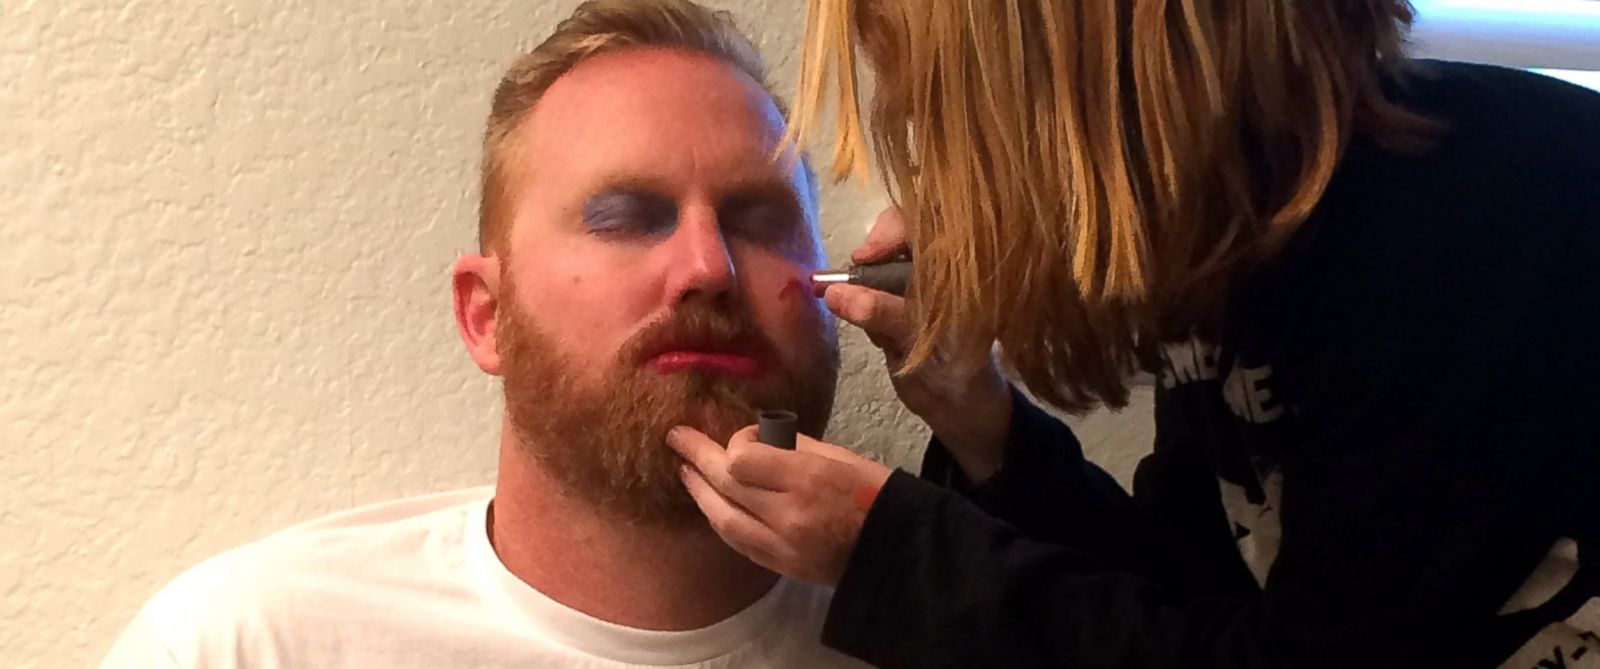 Dad Lets 'Gender-Creative' Son Do His Makeup